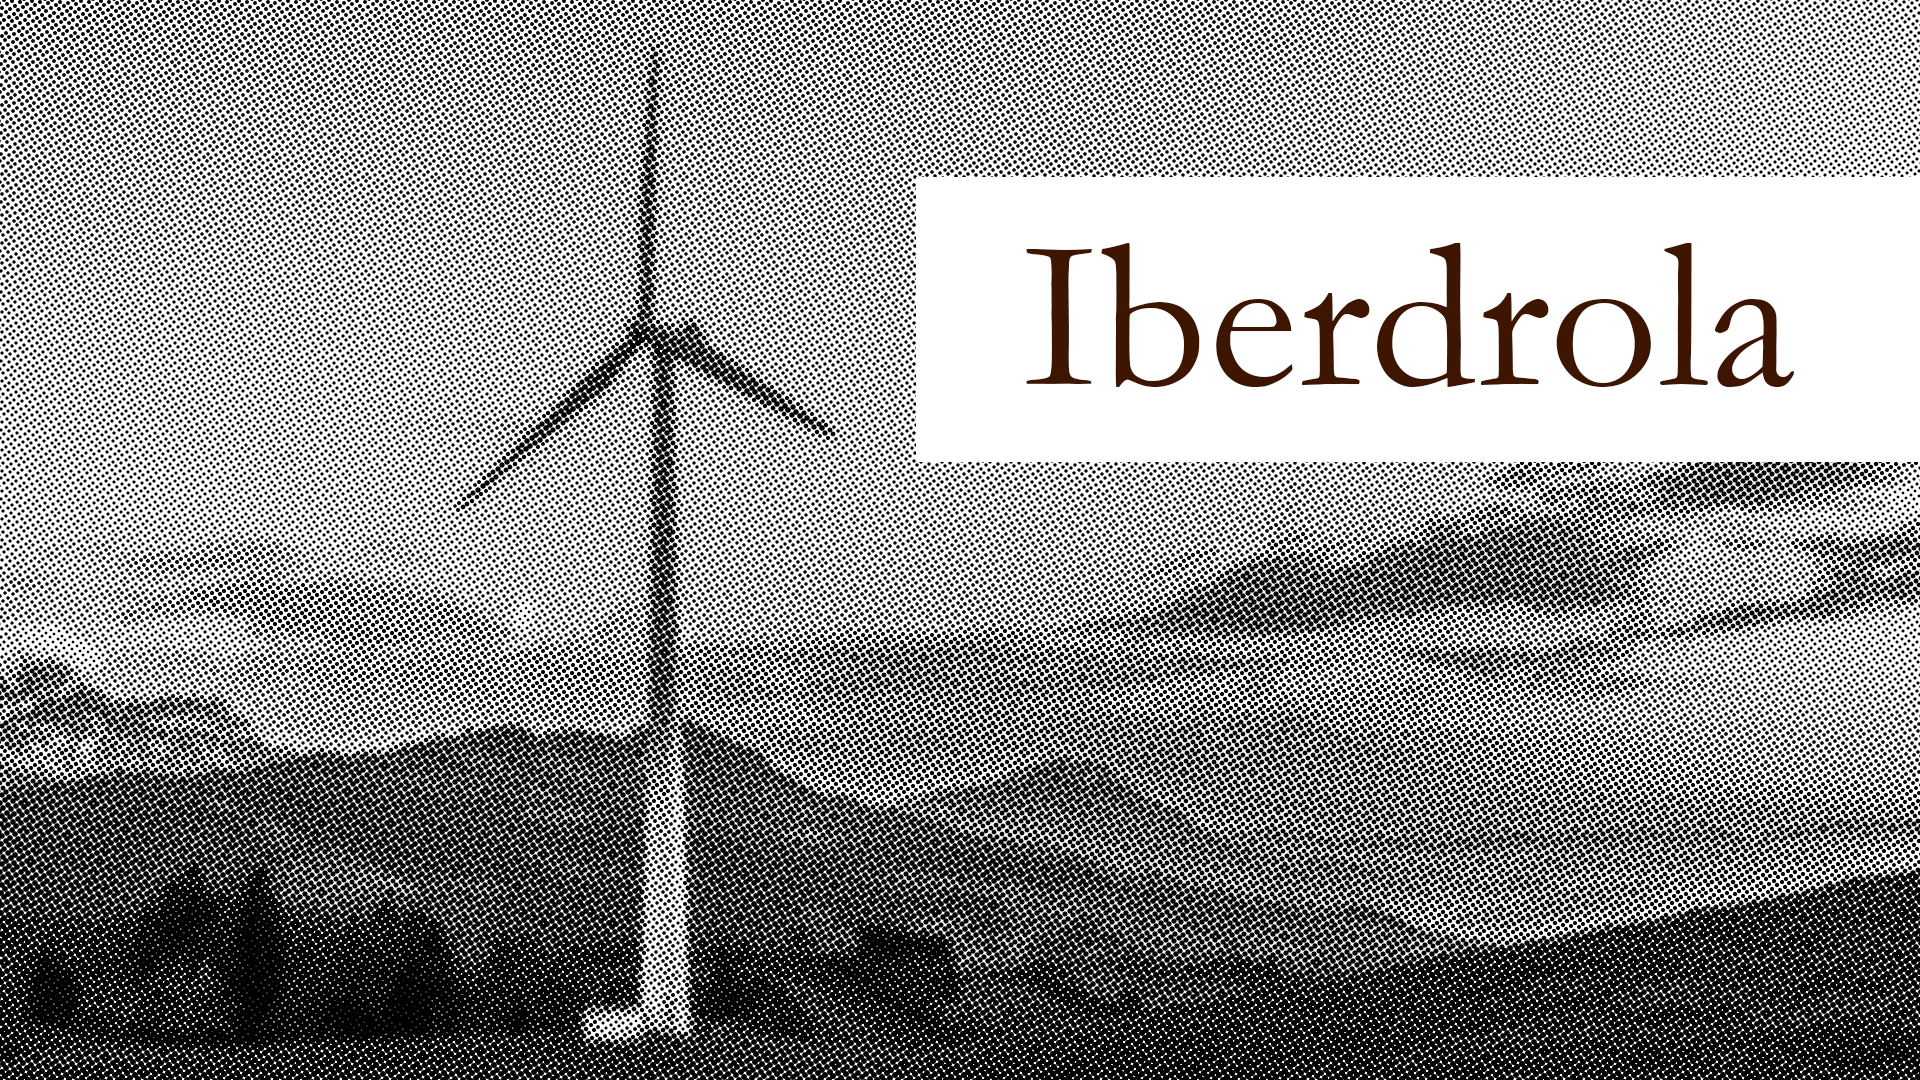 Clean energy from Iberia: Iberdrola